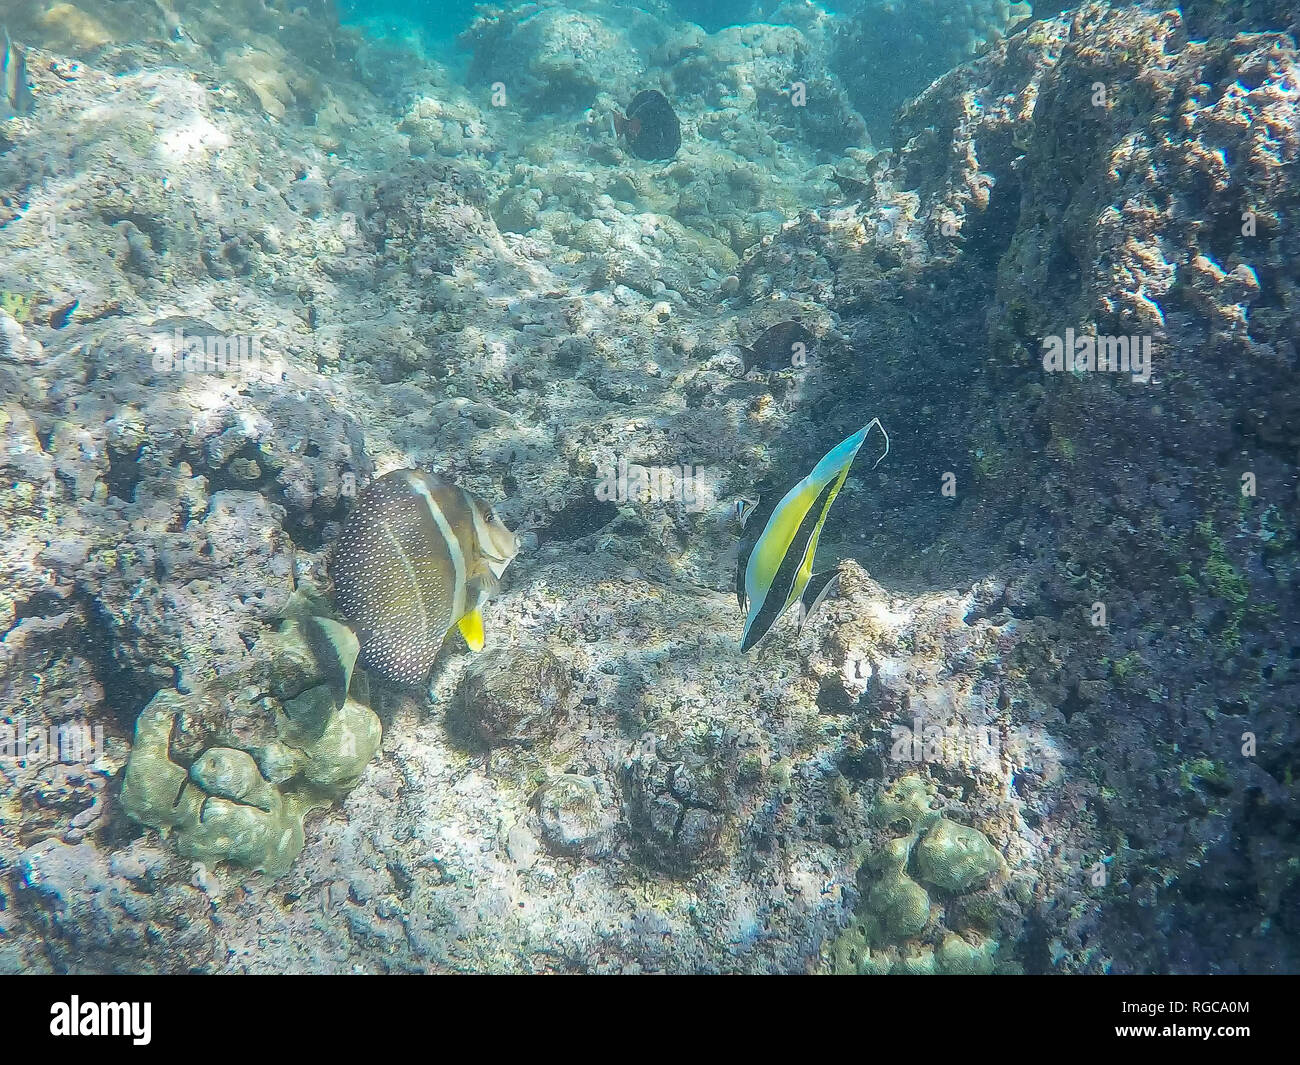 a moorish idol and other reef fish swim at hanauma bay, hawaii Stock Photo